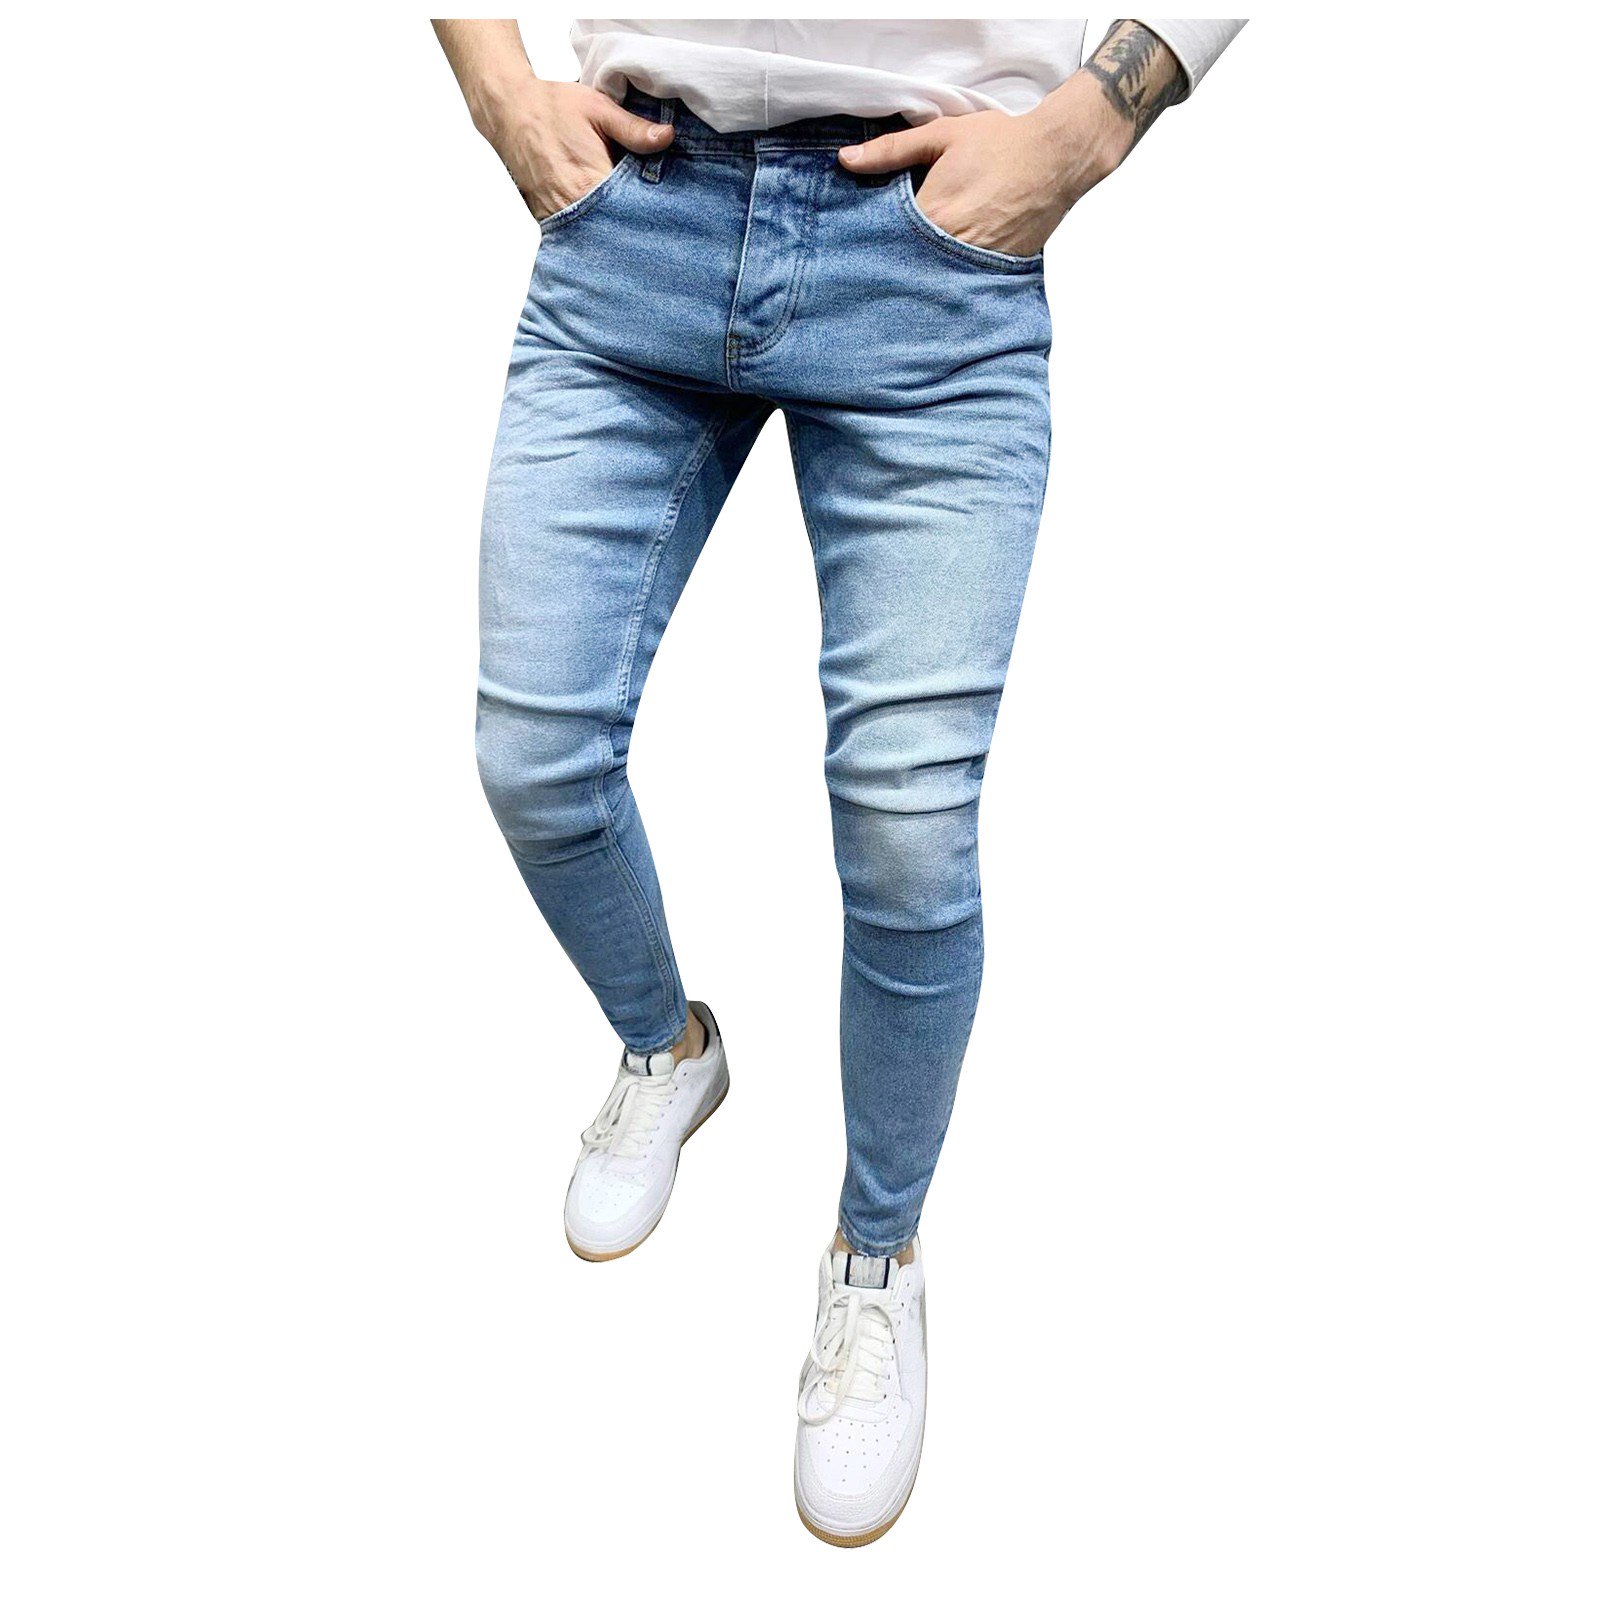 Men's Slim Fit Jeans: Athletic & Stretch Fits